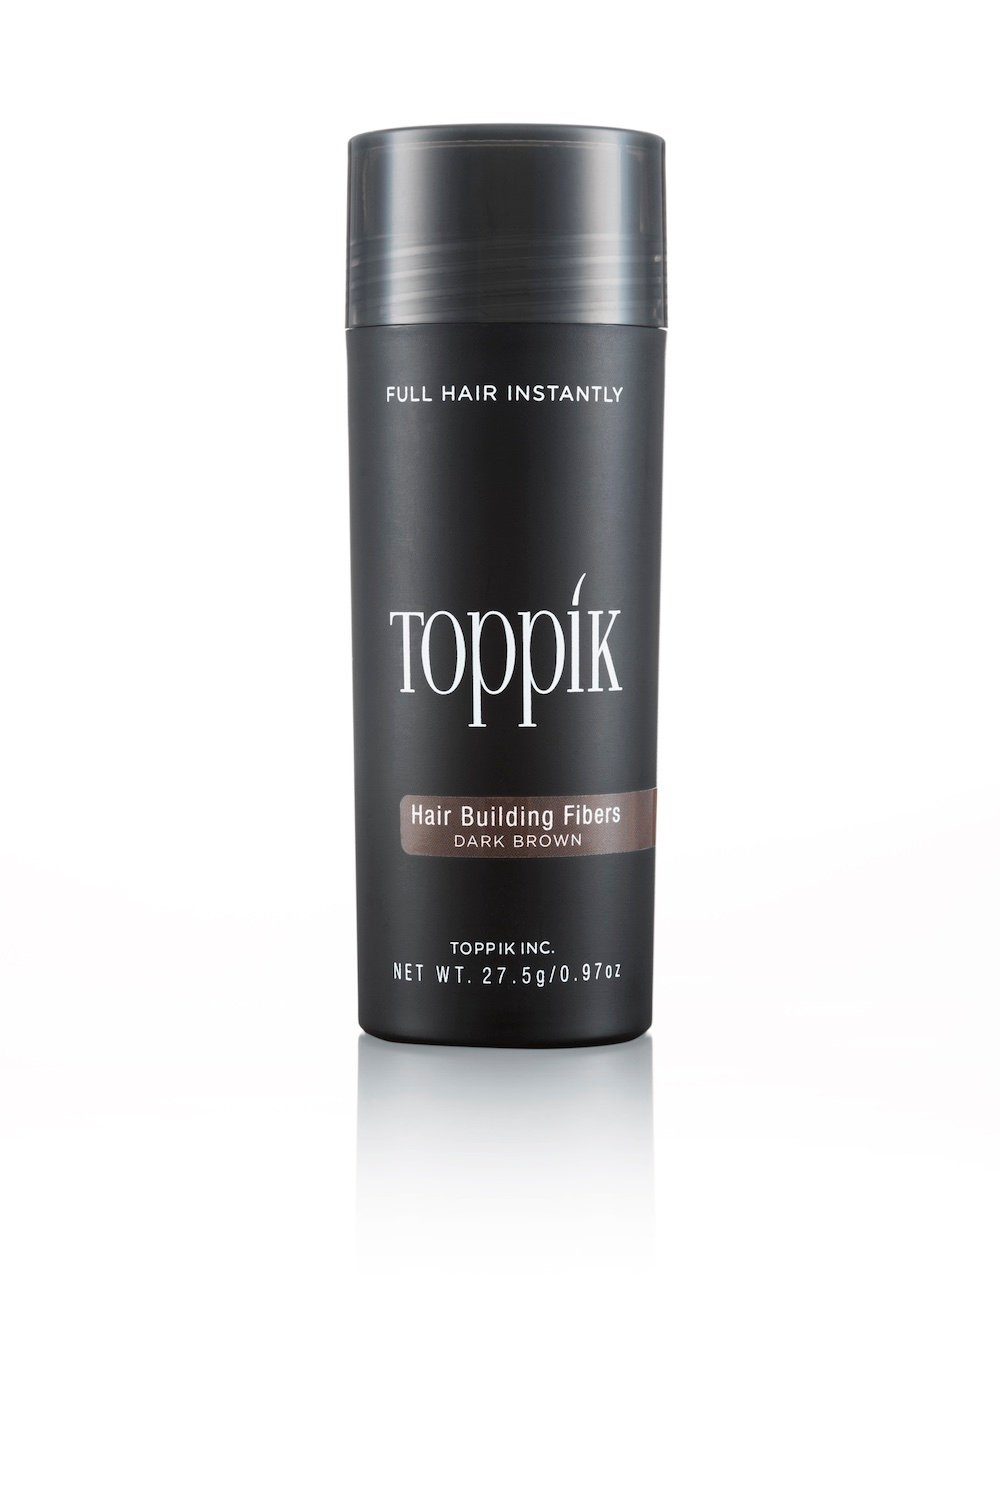 Optimizer - TOPPIK - Rotbraun Puder Hair gr. Haarverdichter Streuhaar Schütthaar, Fibers, + Haarverdichtung Sparangebot! 27,5 TOPPIK Hairline Haarstyling-Set TOPPIK